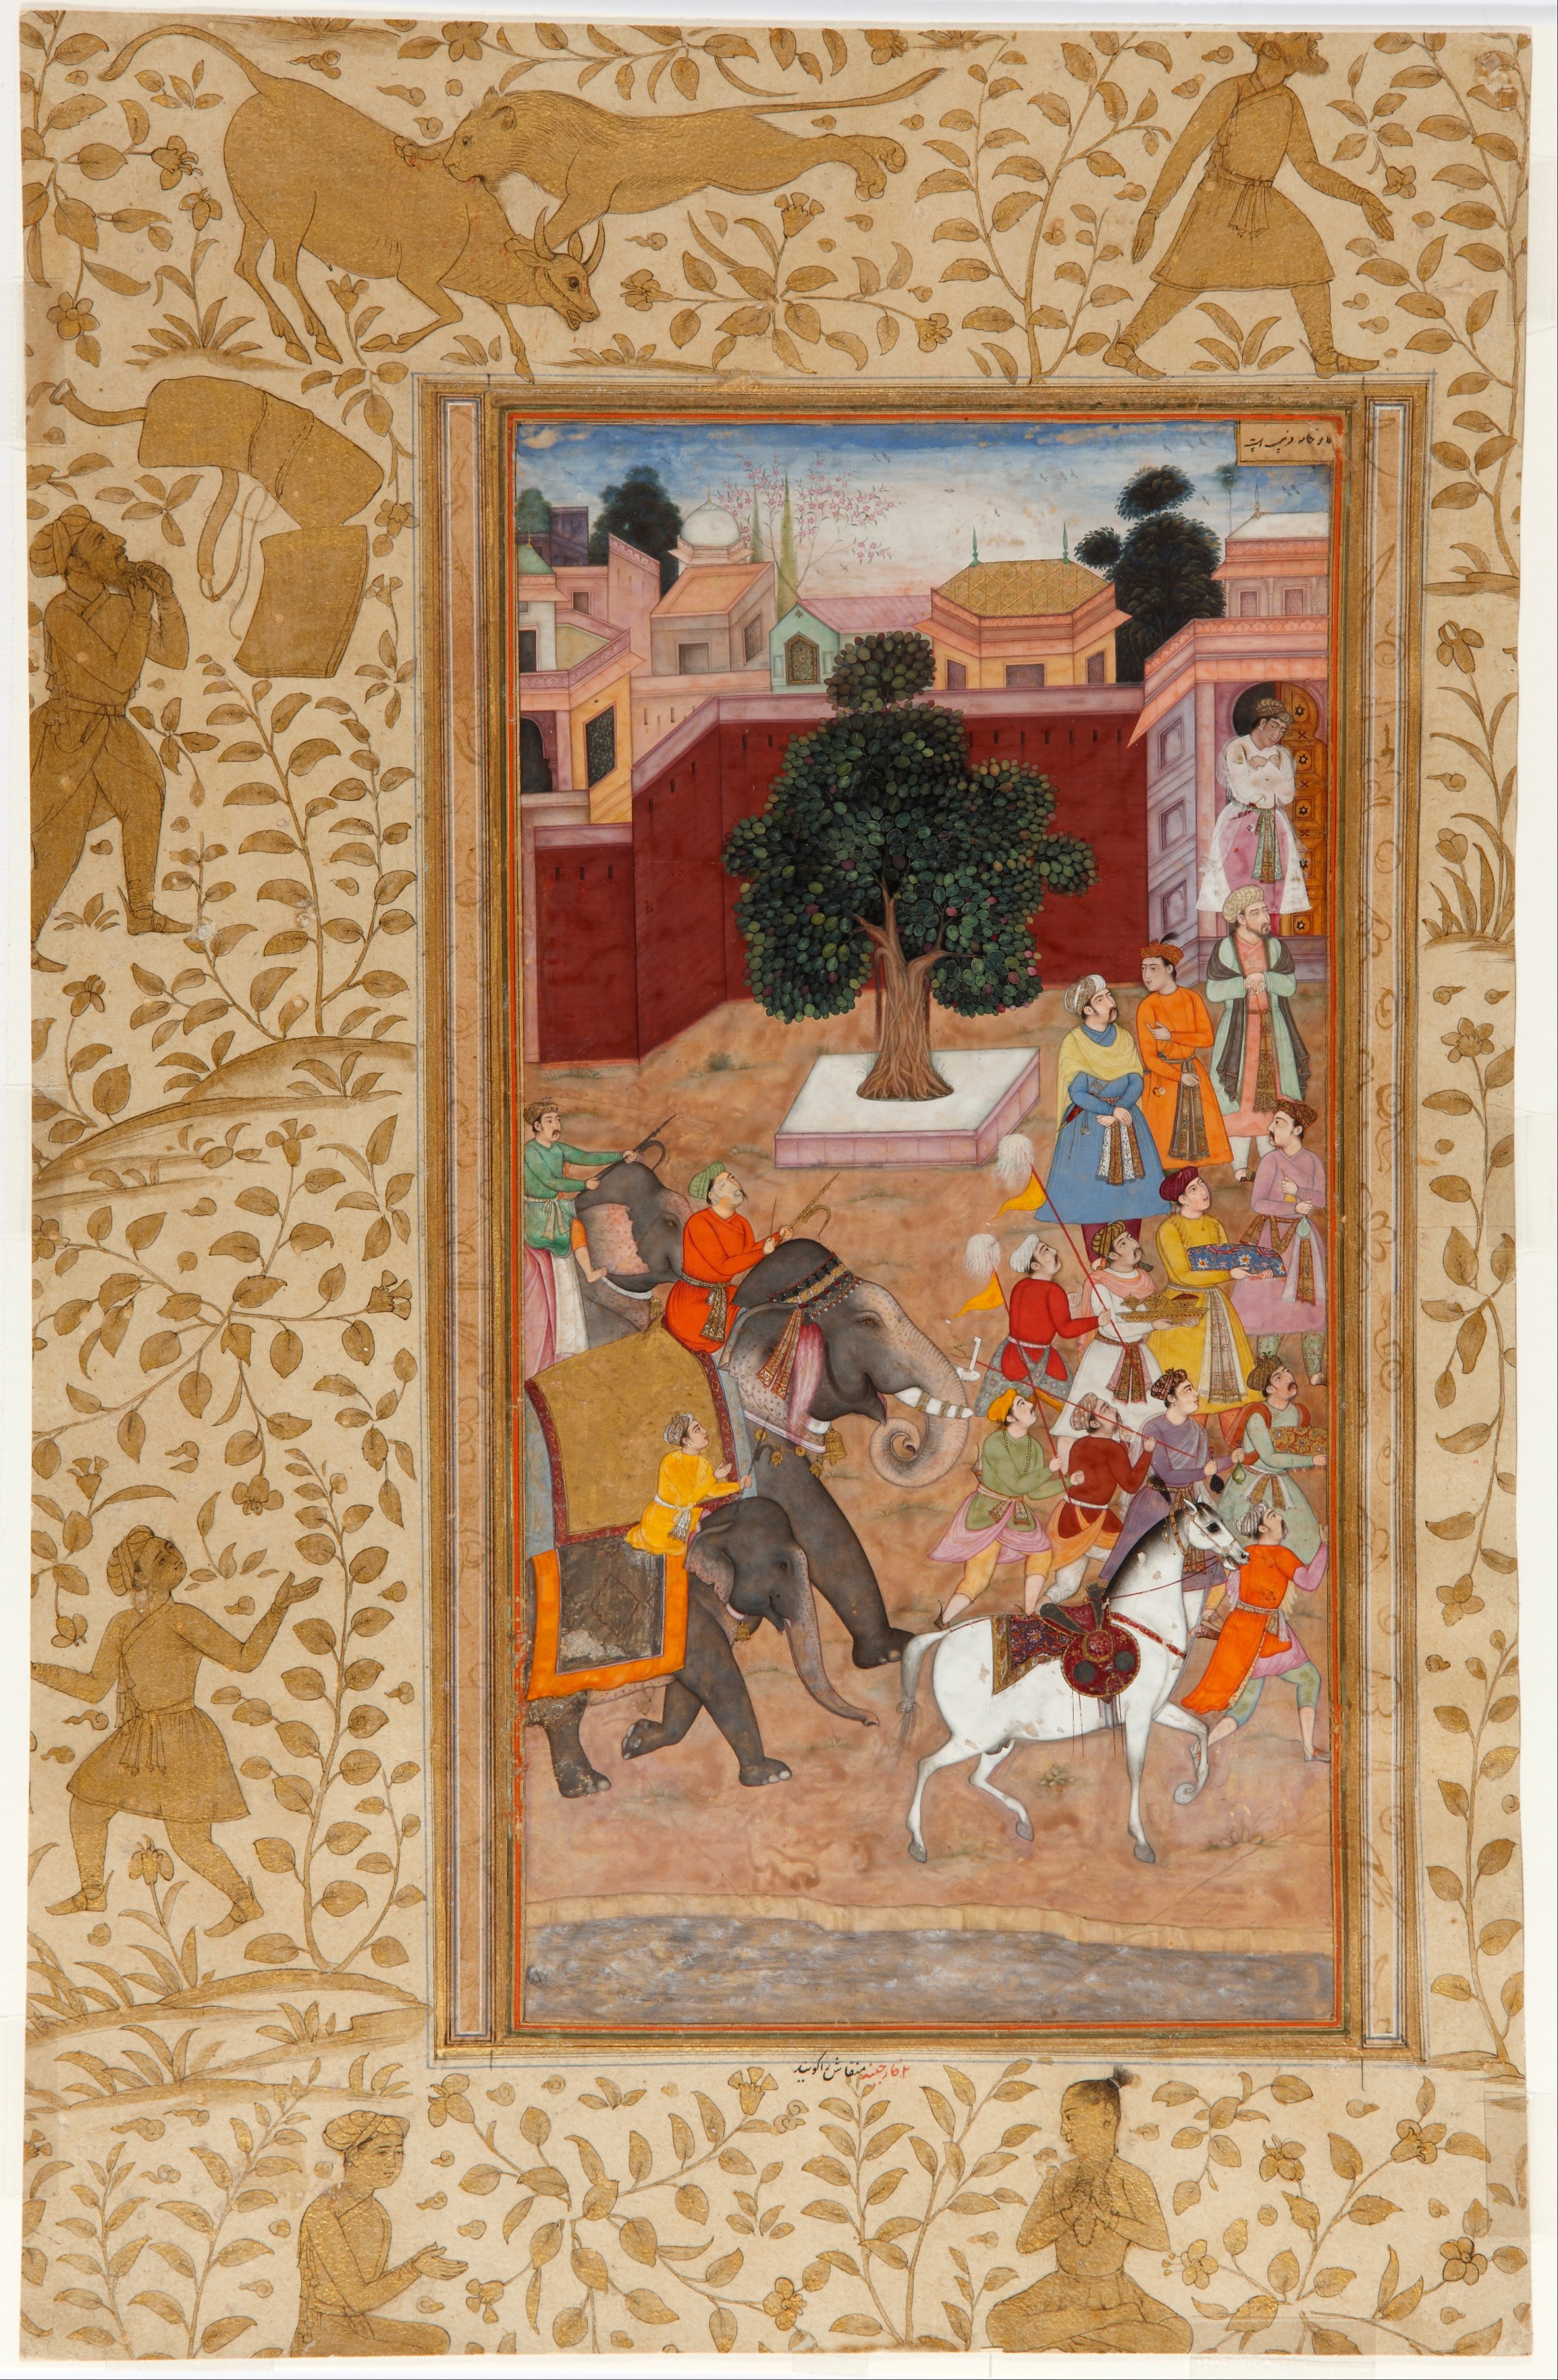 Procession of the Emperor of Akbar in the Akbar Namah of Abu-l Fazl - Google Art Project